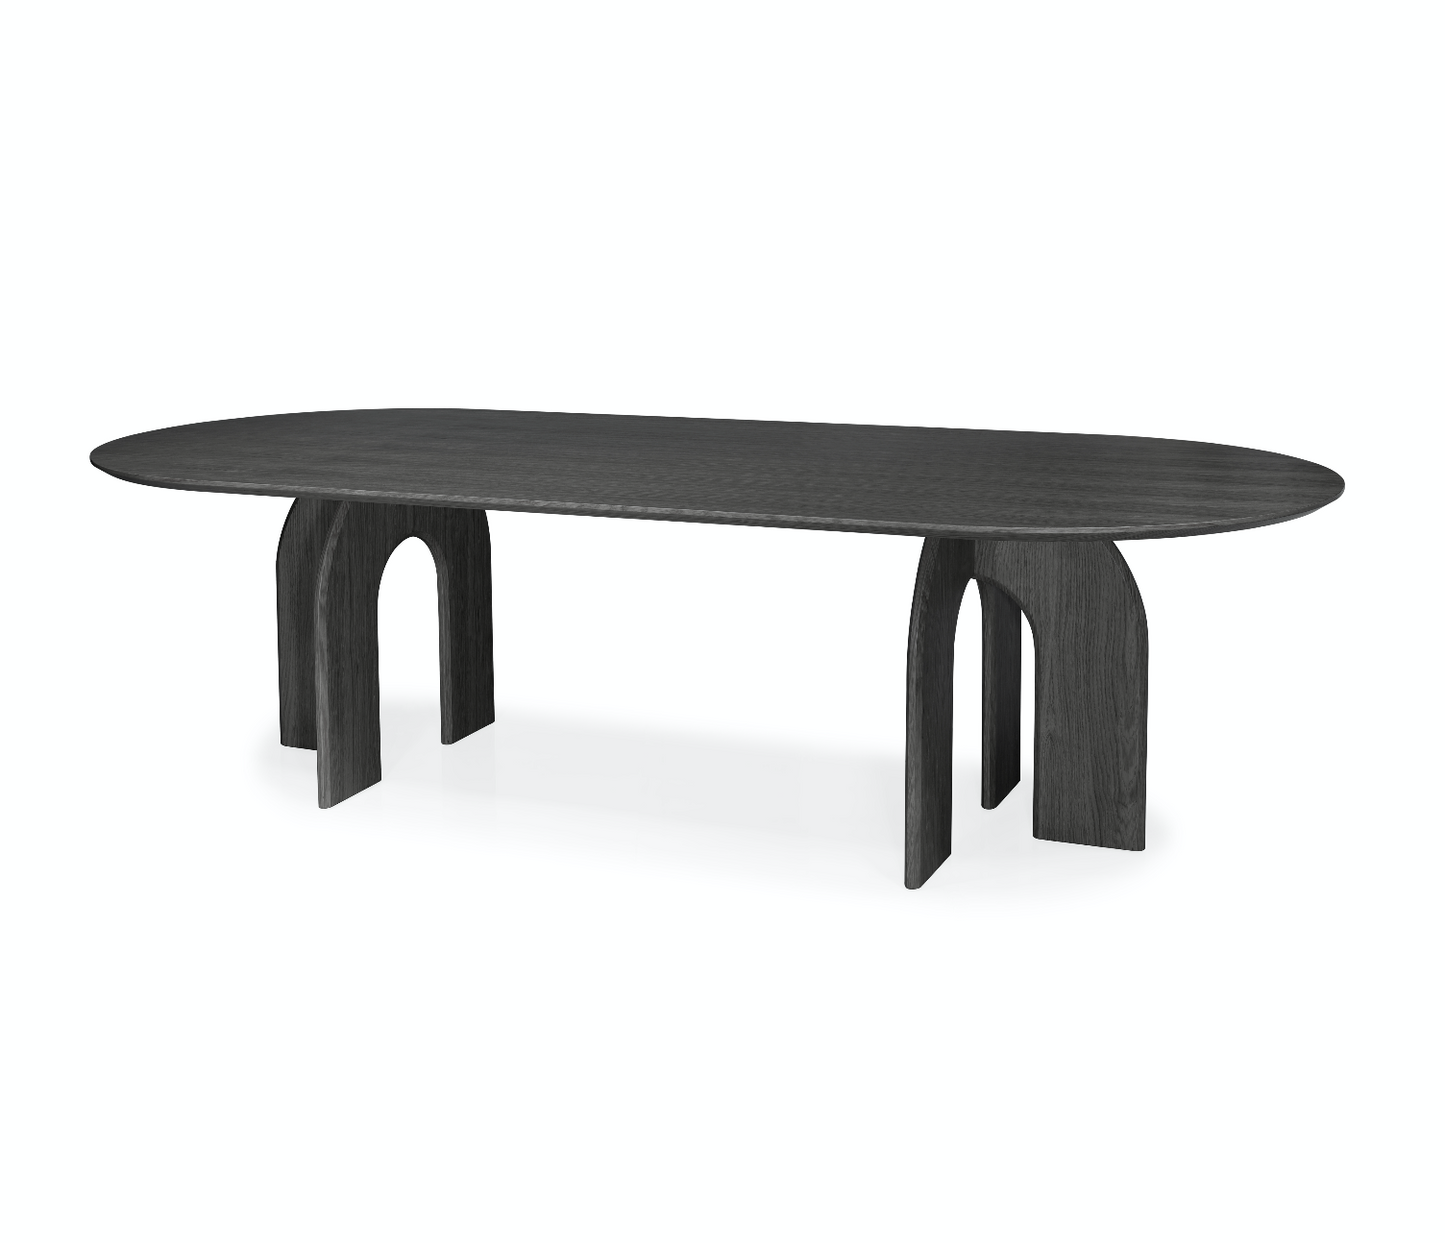 Hana oval dining table